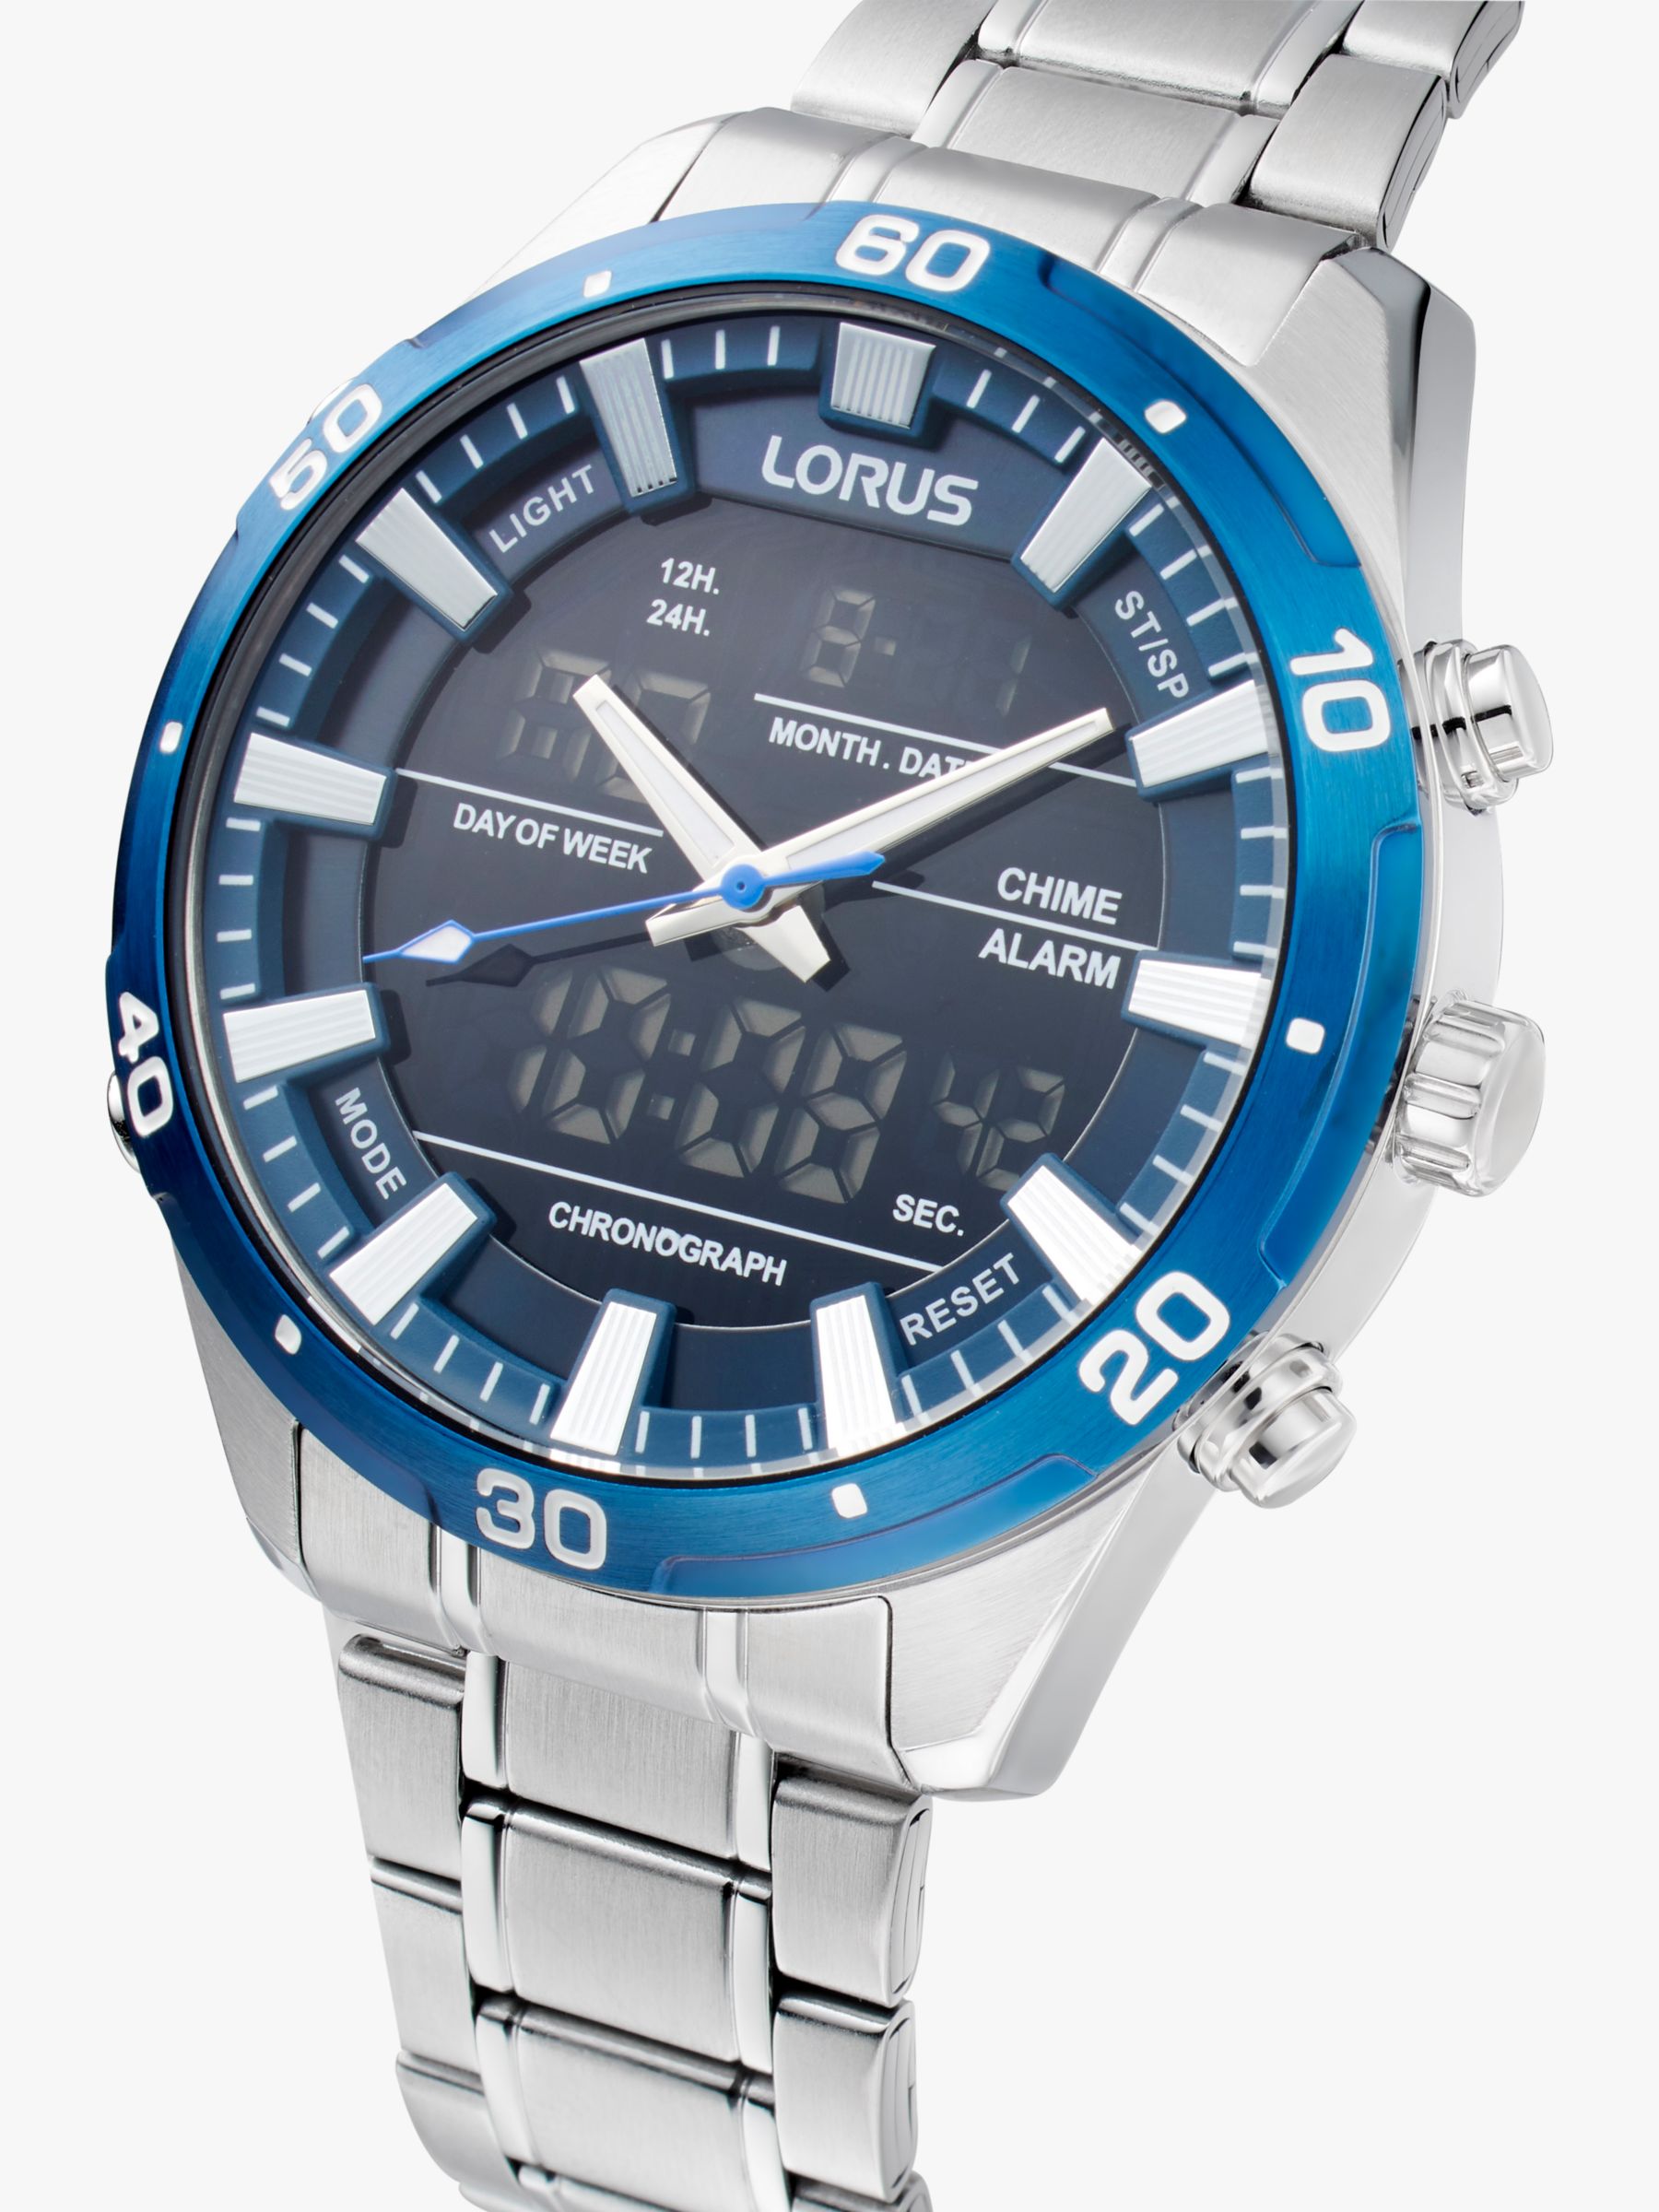 Duo Display Watch, Lewis Analogue/Digital Bracelet & Partners RW647AX9 Men\'s Strap Silver/Blue at Lorus John